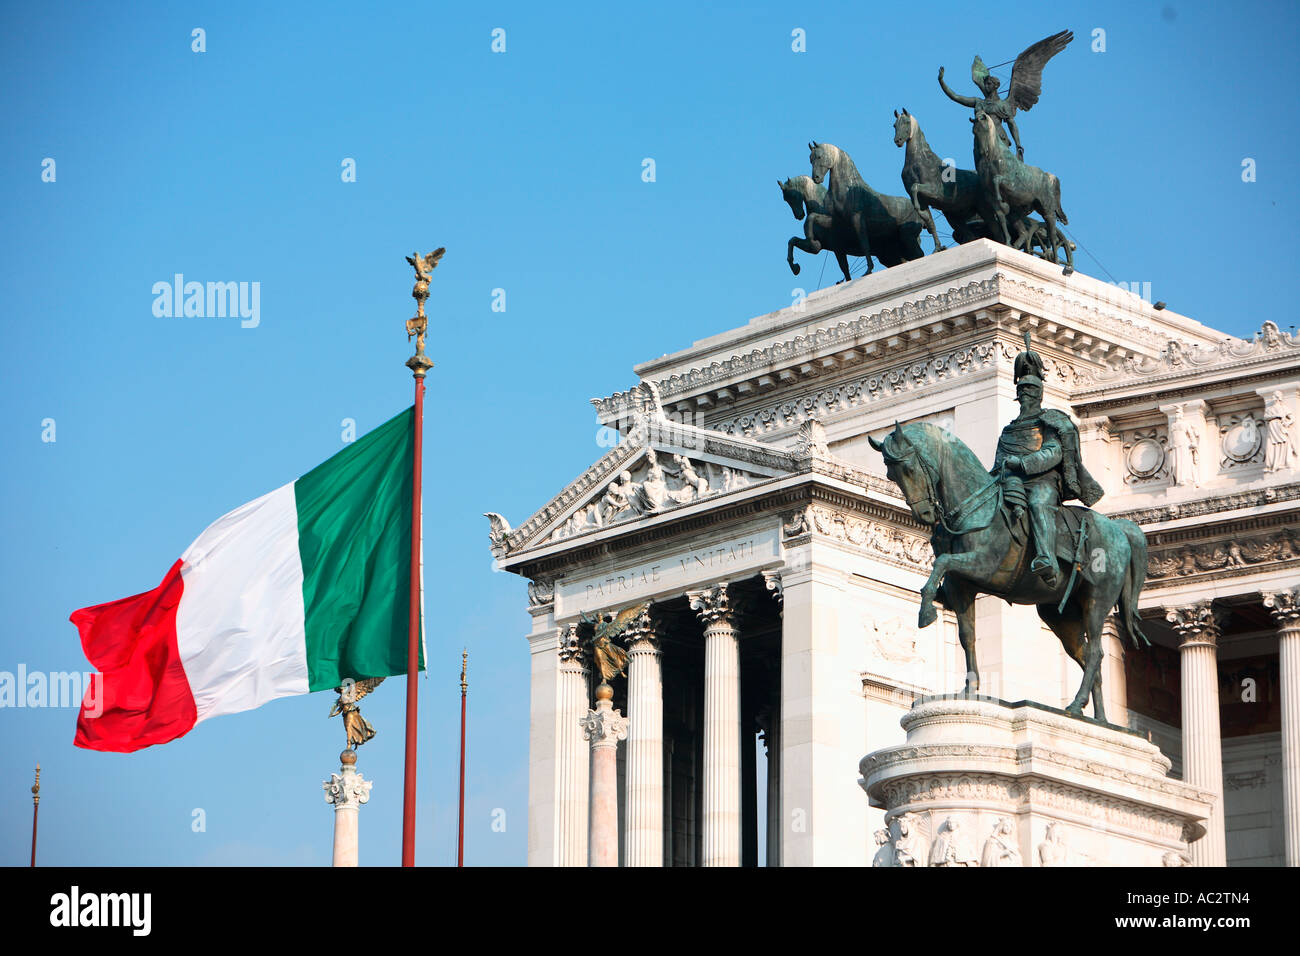 Rome, la colline du Capitole, la Piazza del Campidoglio, Emanuel, Viktor, monument de Vittorio Emanuele II Banque D'Images